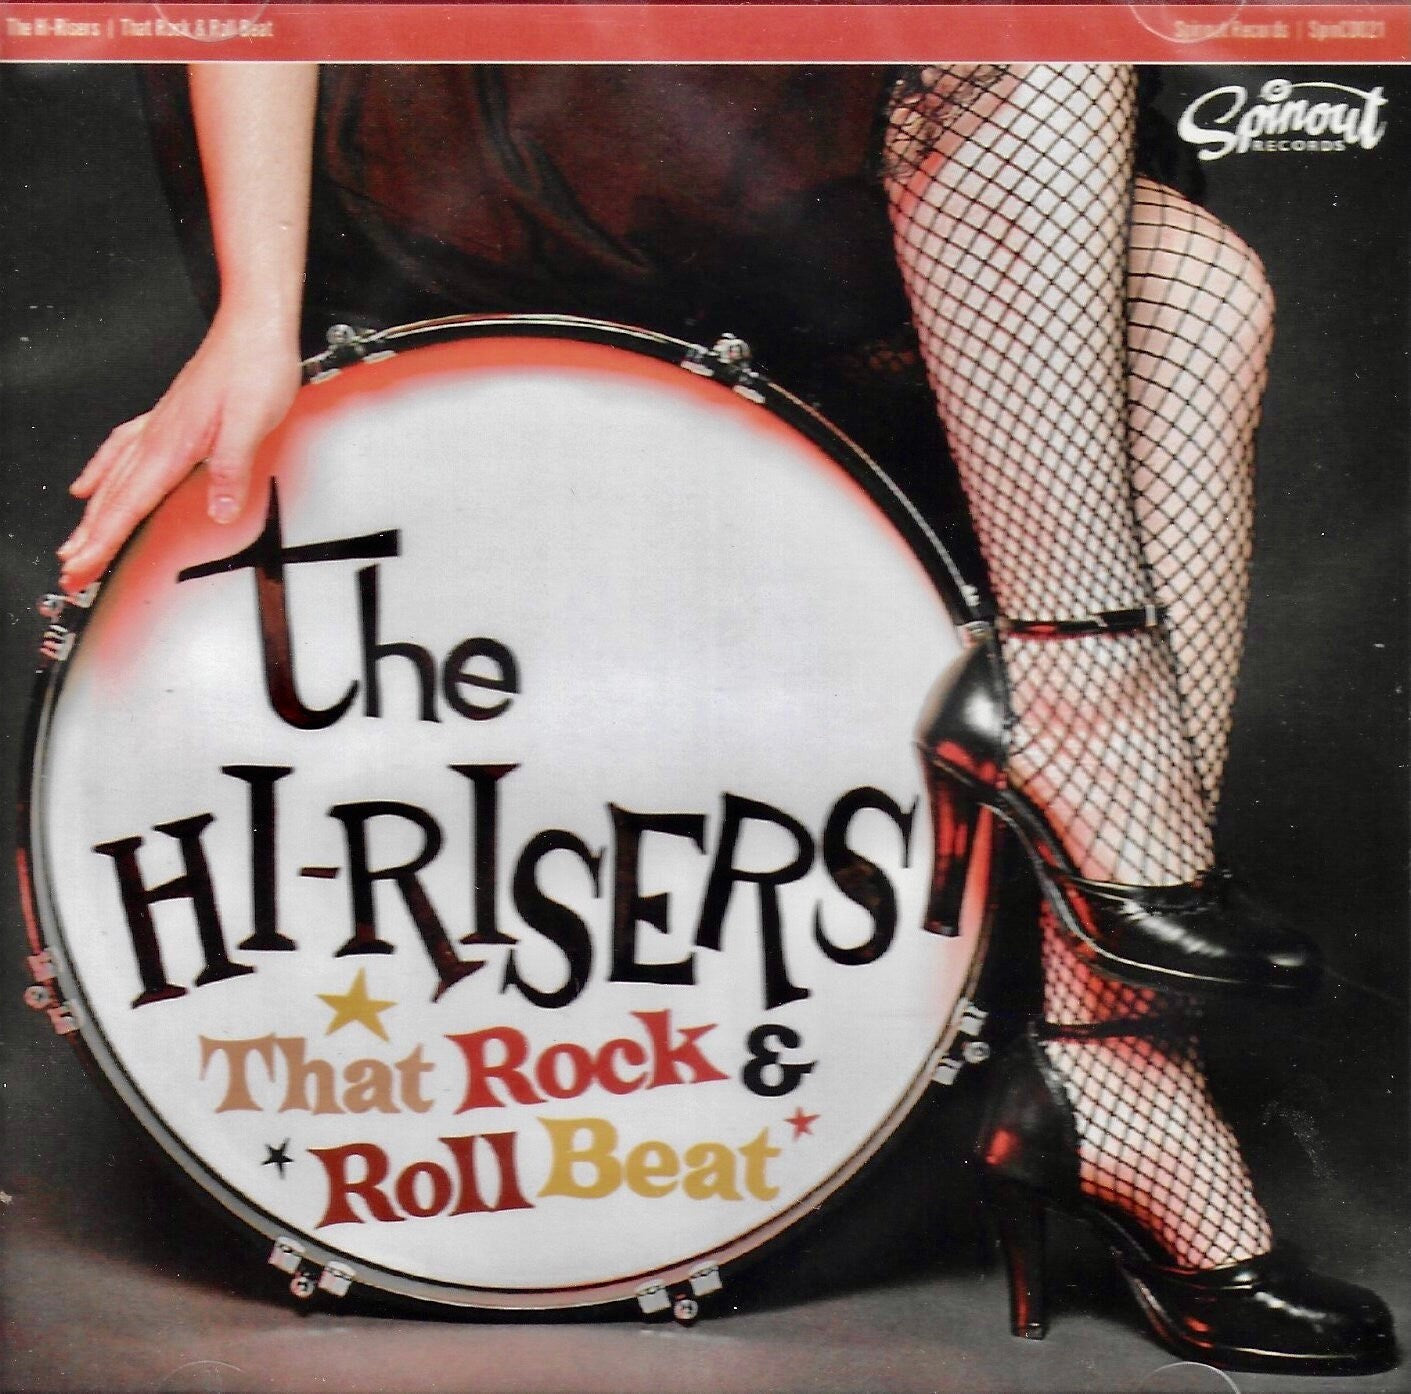 The Hi-Risers "That Rock & Roll Beat" CD